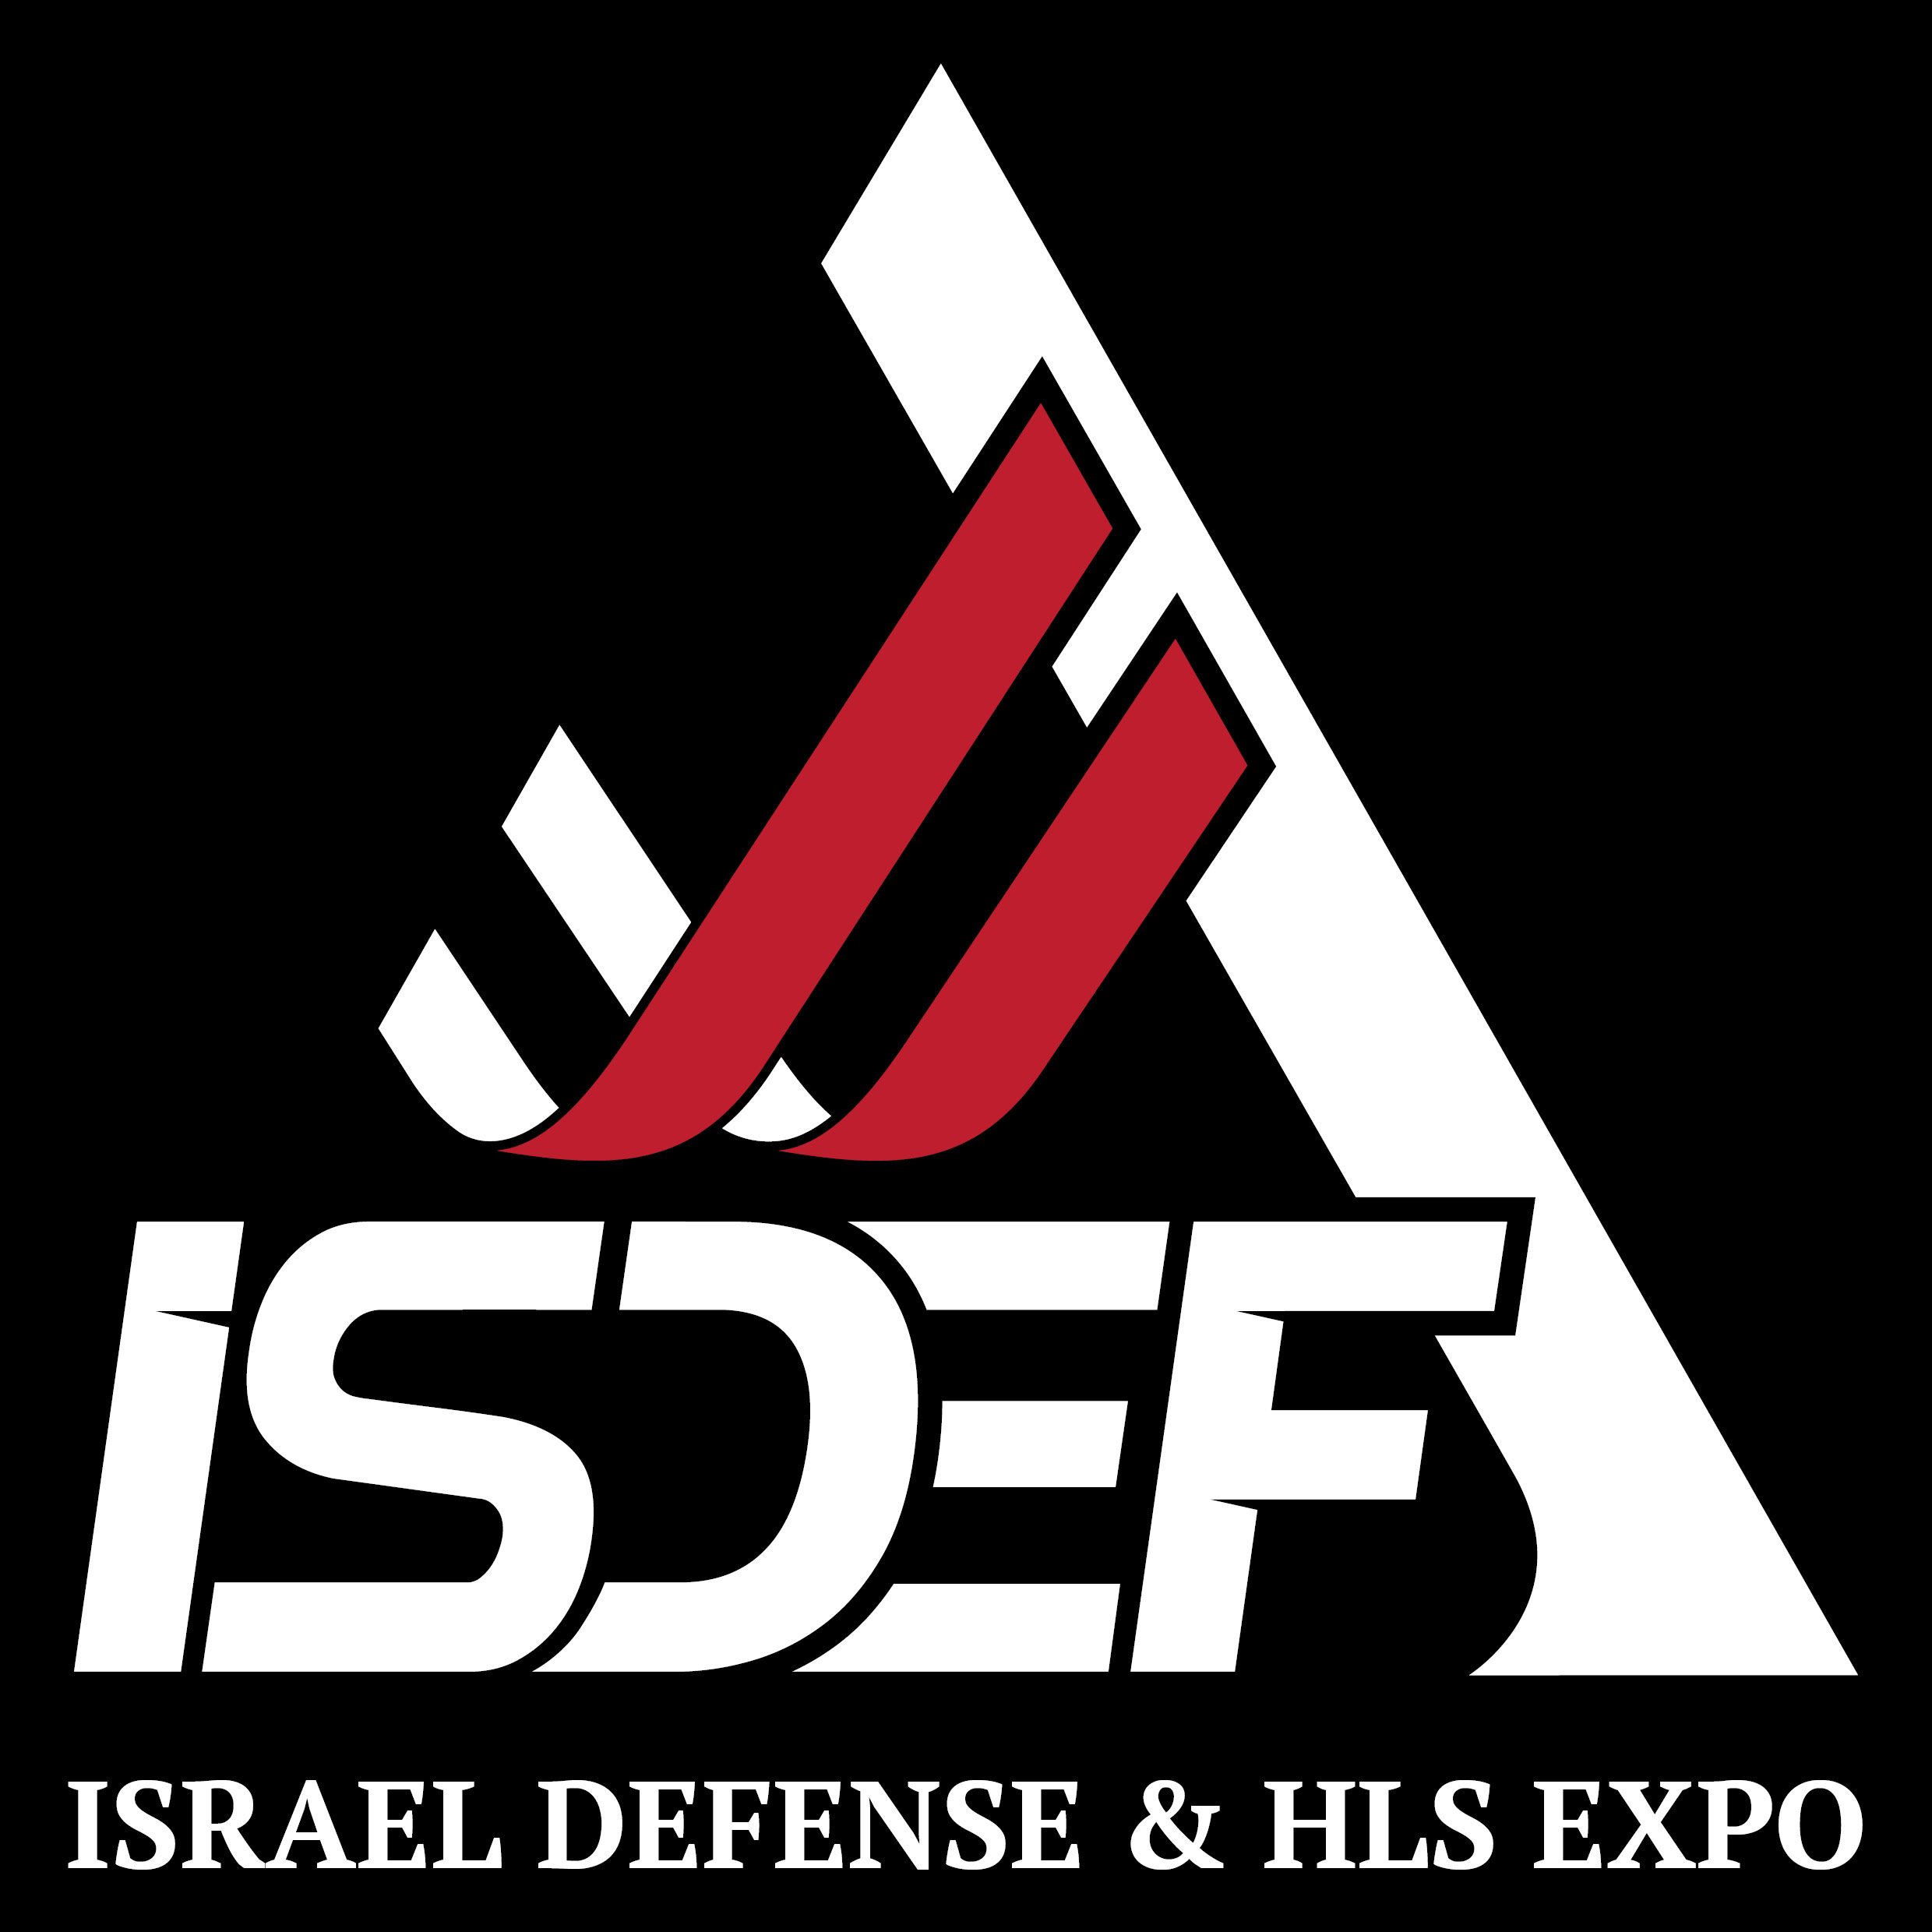 ISDEF Logo